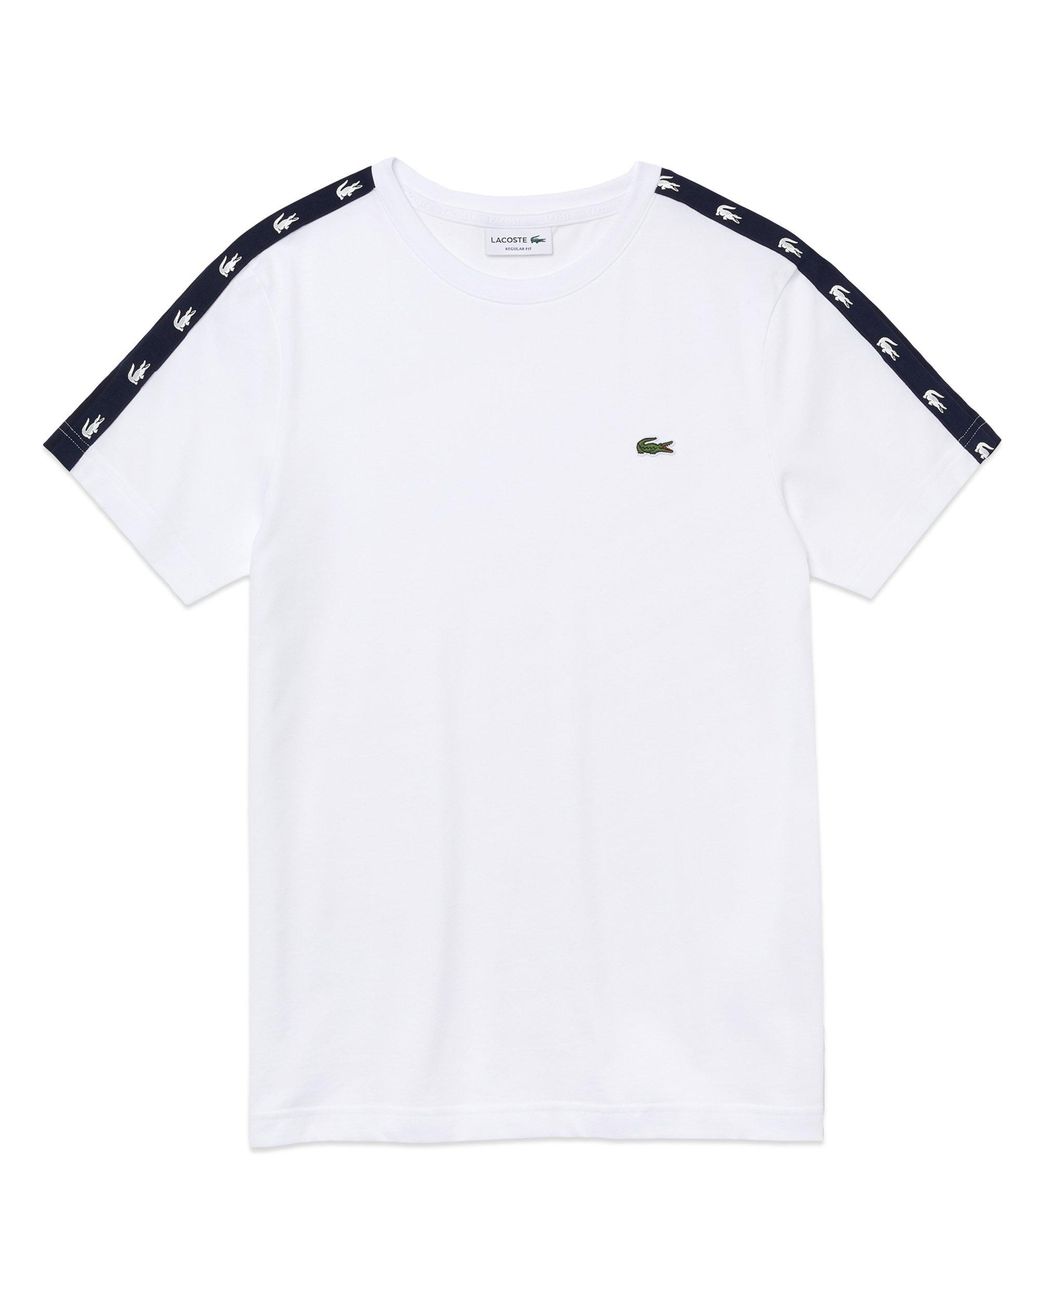 Lacoste Cotton Crocodile Tape T-shirt Th5172 for Men - Lyst